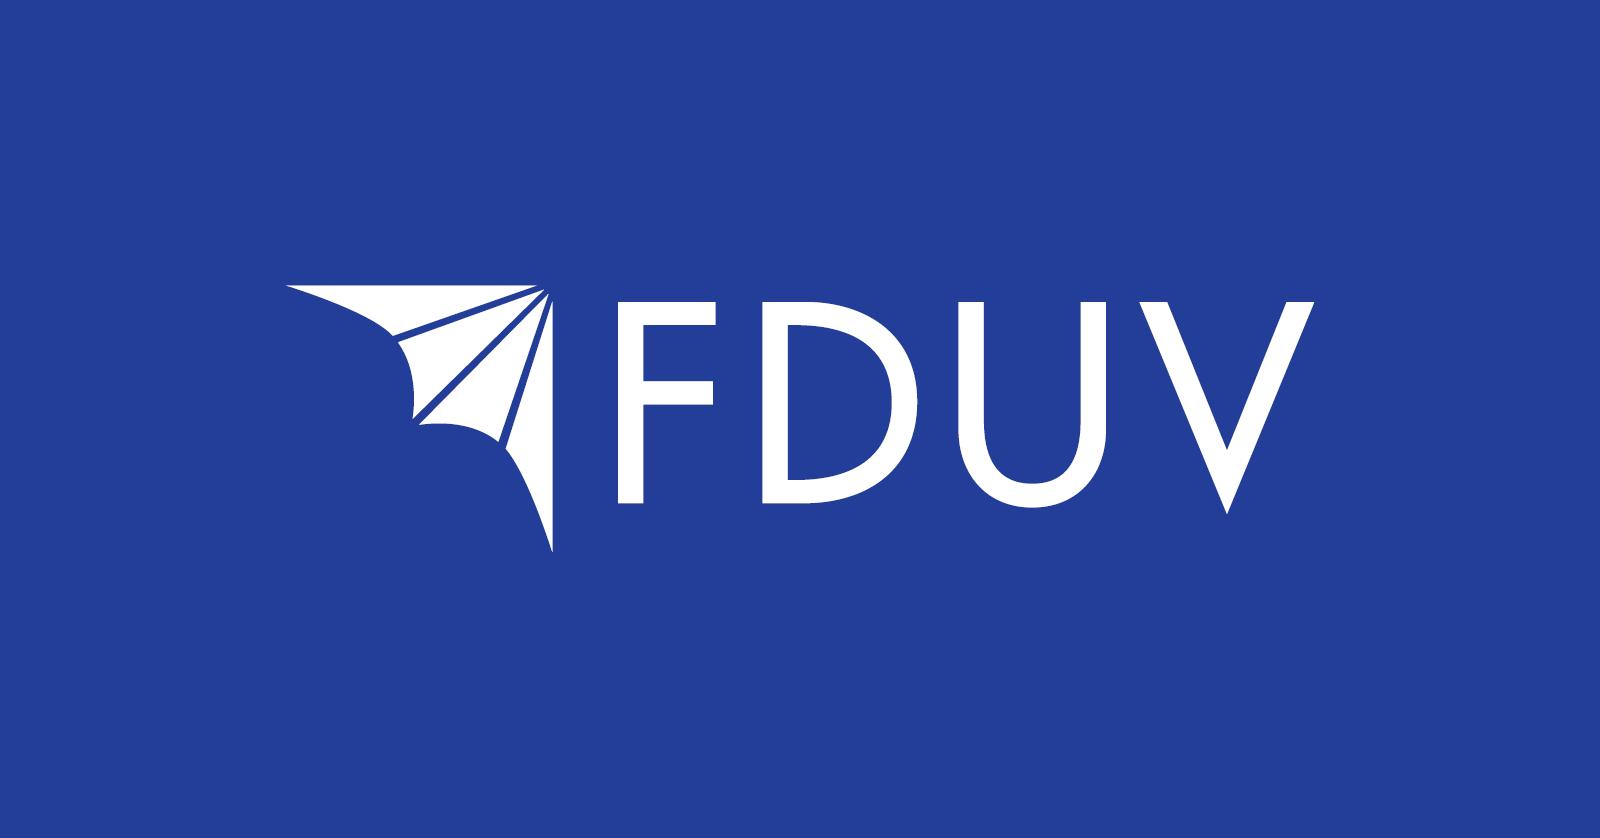 FDUV:s logotyp.